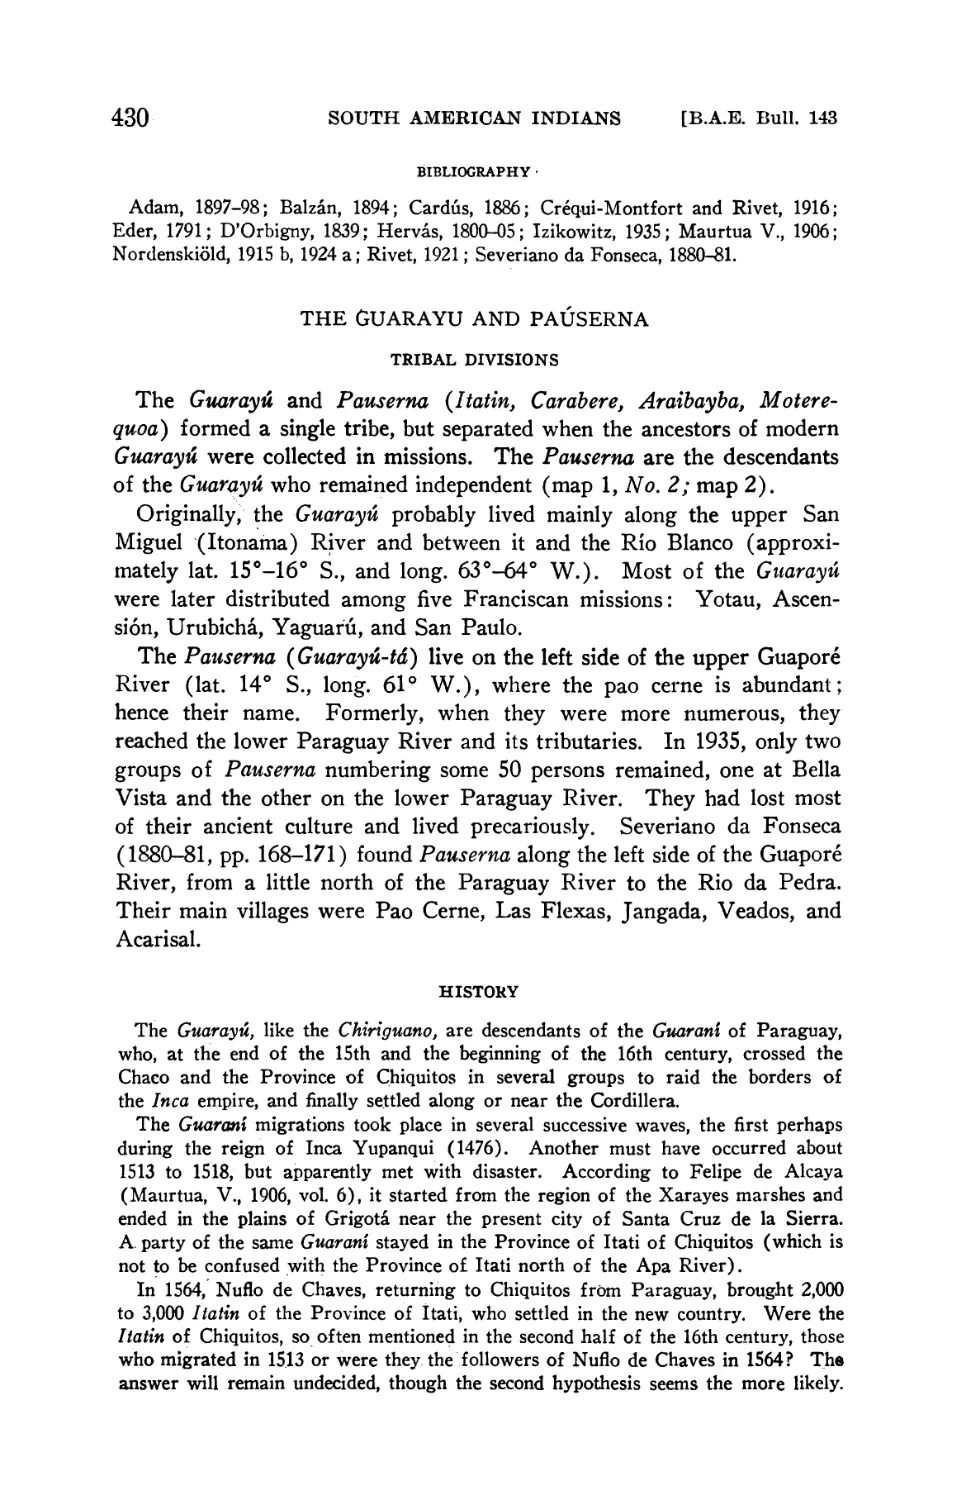 Bibliography
The Guarayú and Pauserna
History